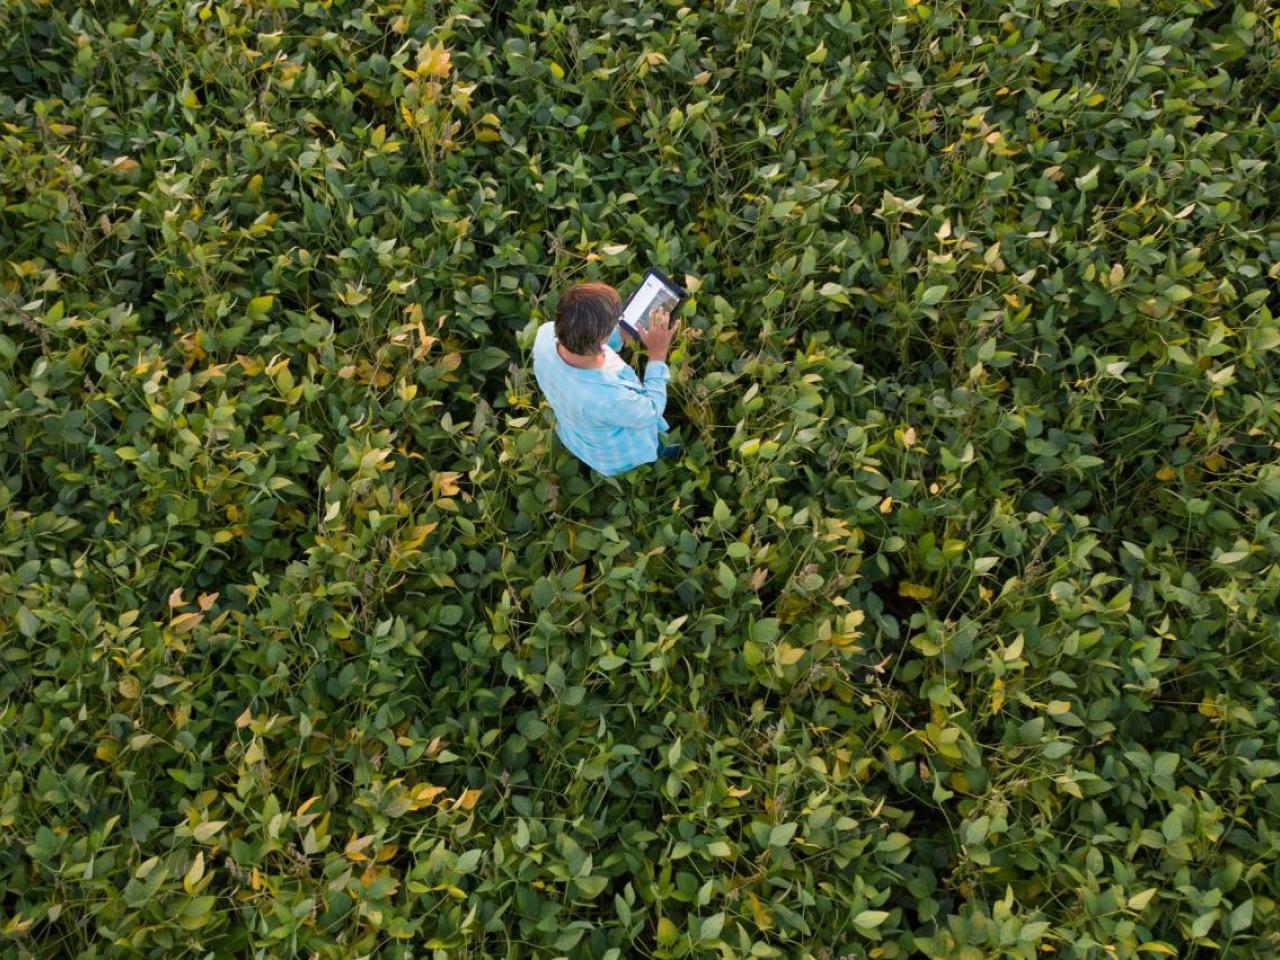 Soybean farmer on a tablet walking through a soybean field